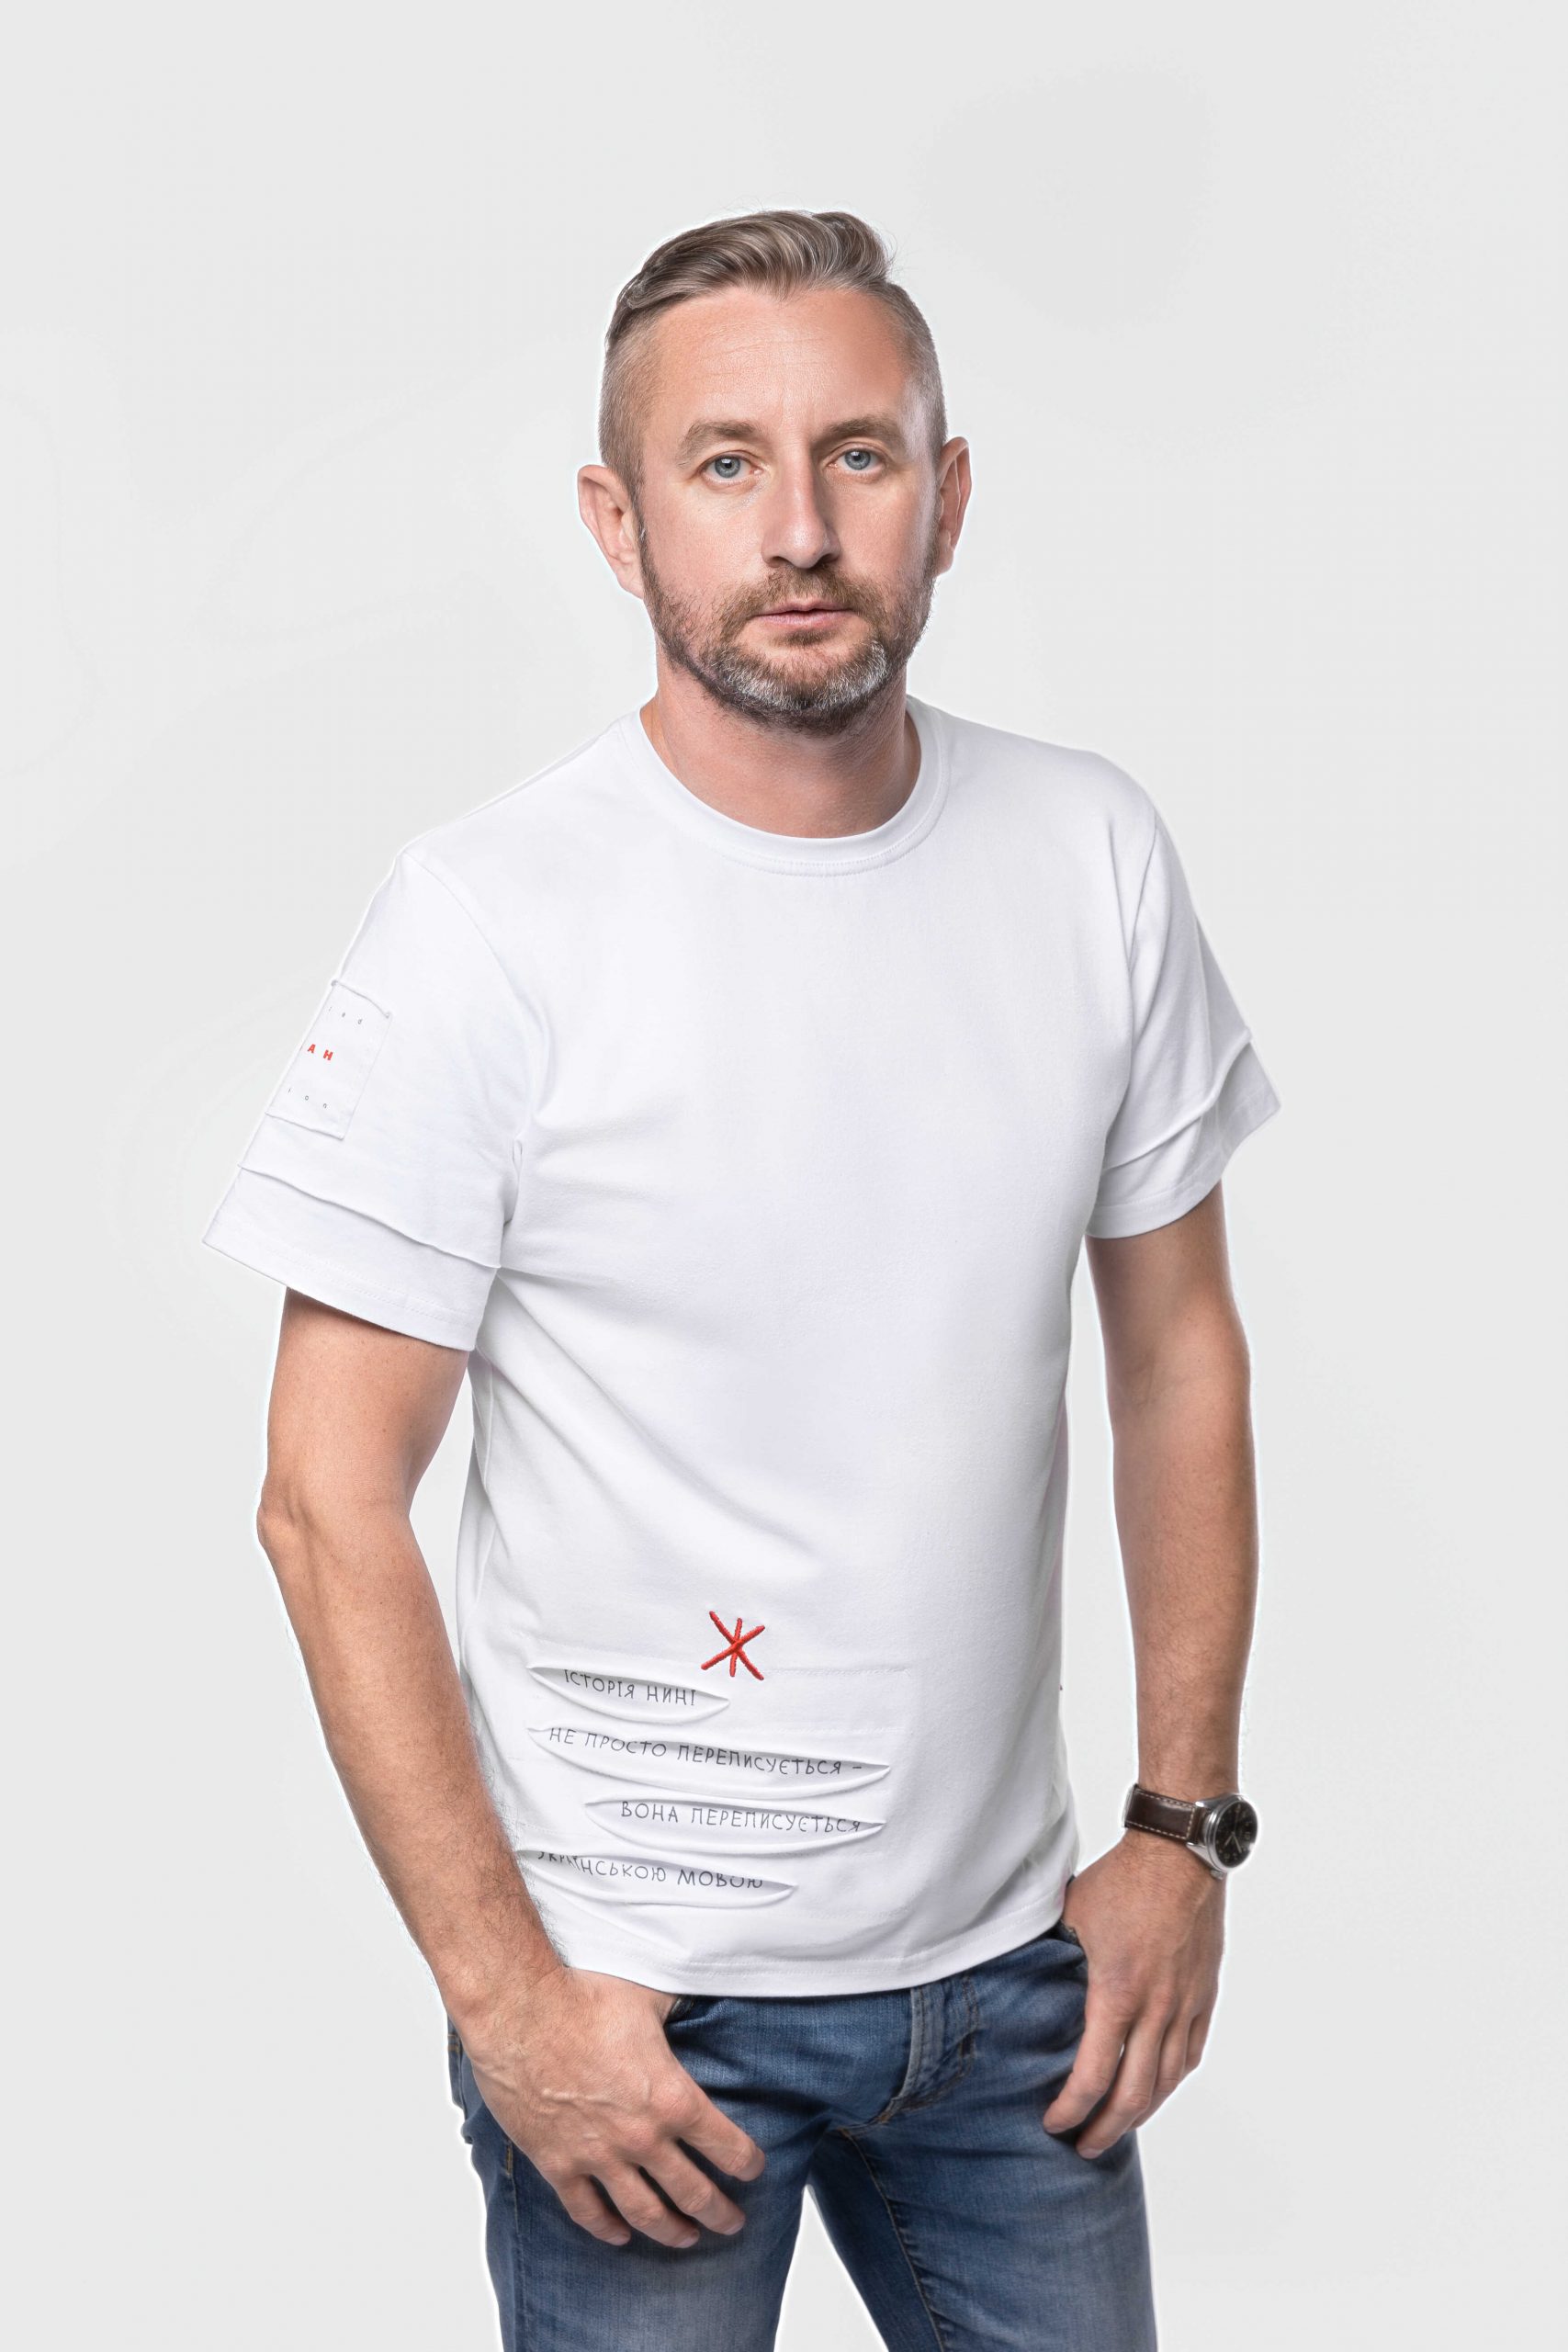 Men's T-Shirt Ukrainian. Color white. See more men’s t-shirts in the catalog.